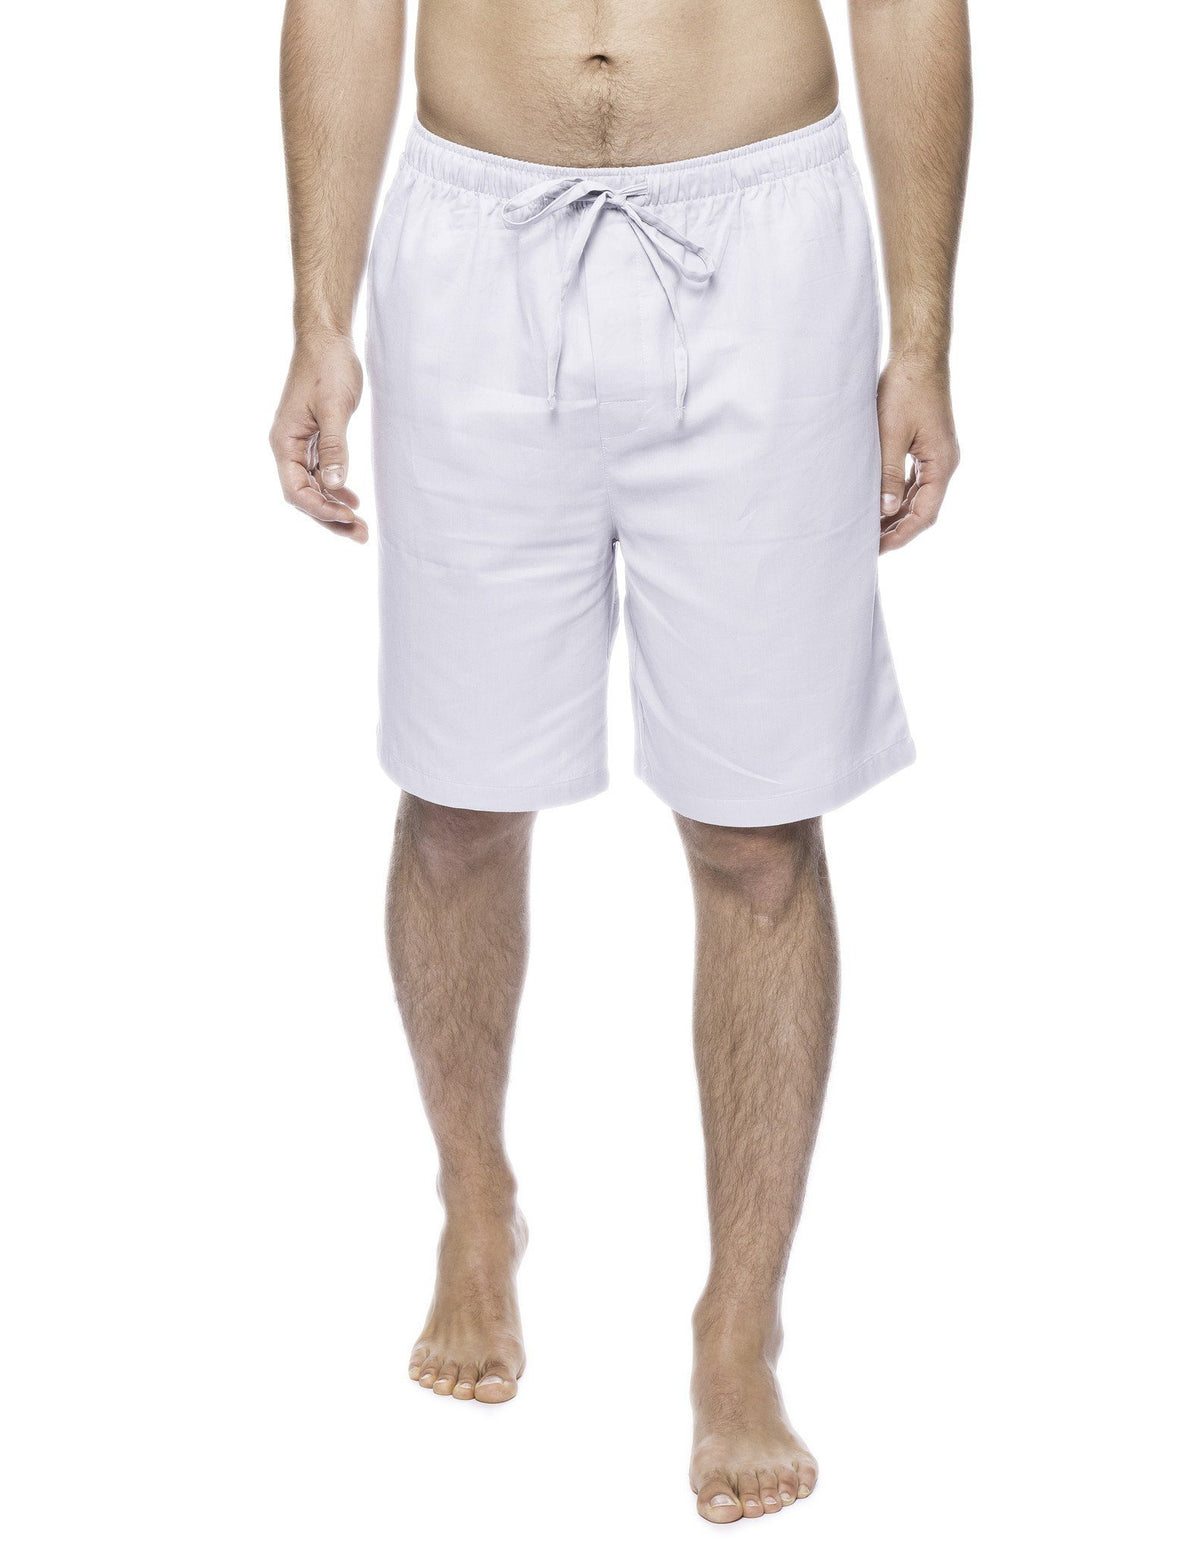 Men's 100% Woven Cotton Lounge Shorts - Light Grey